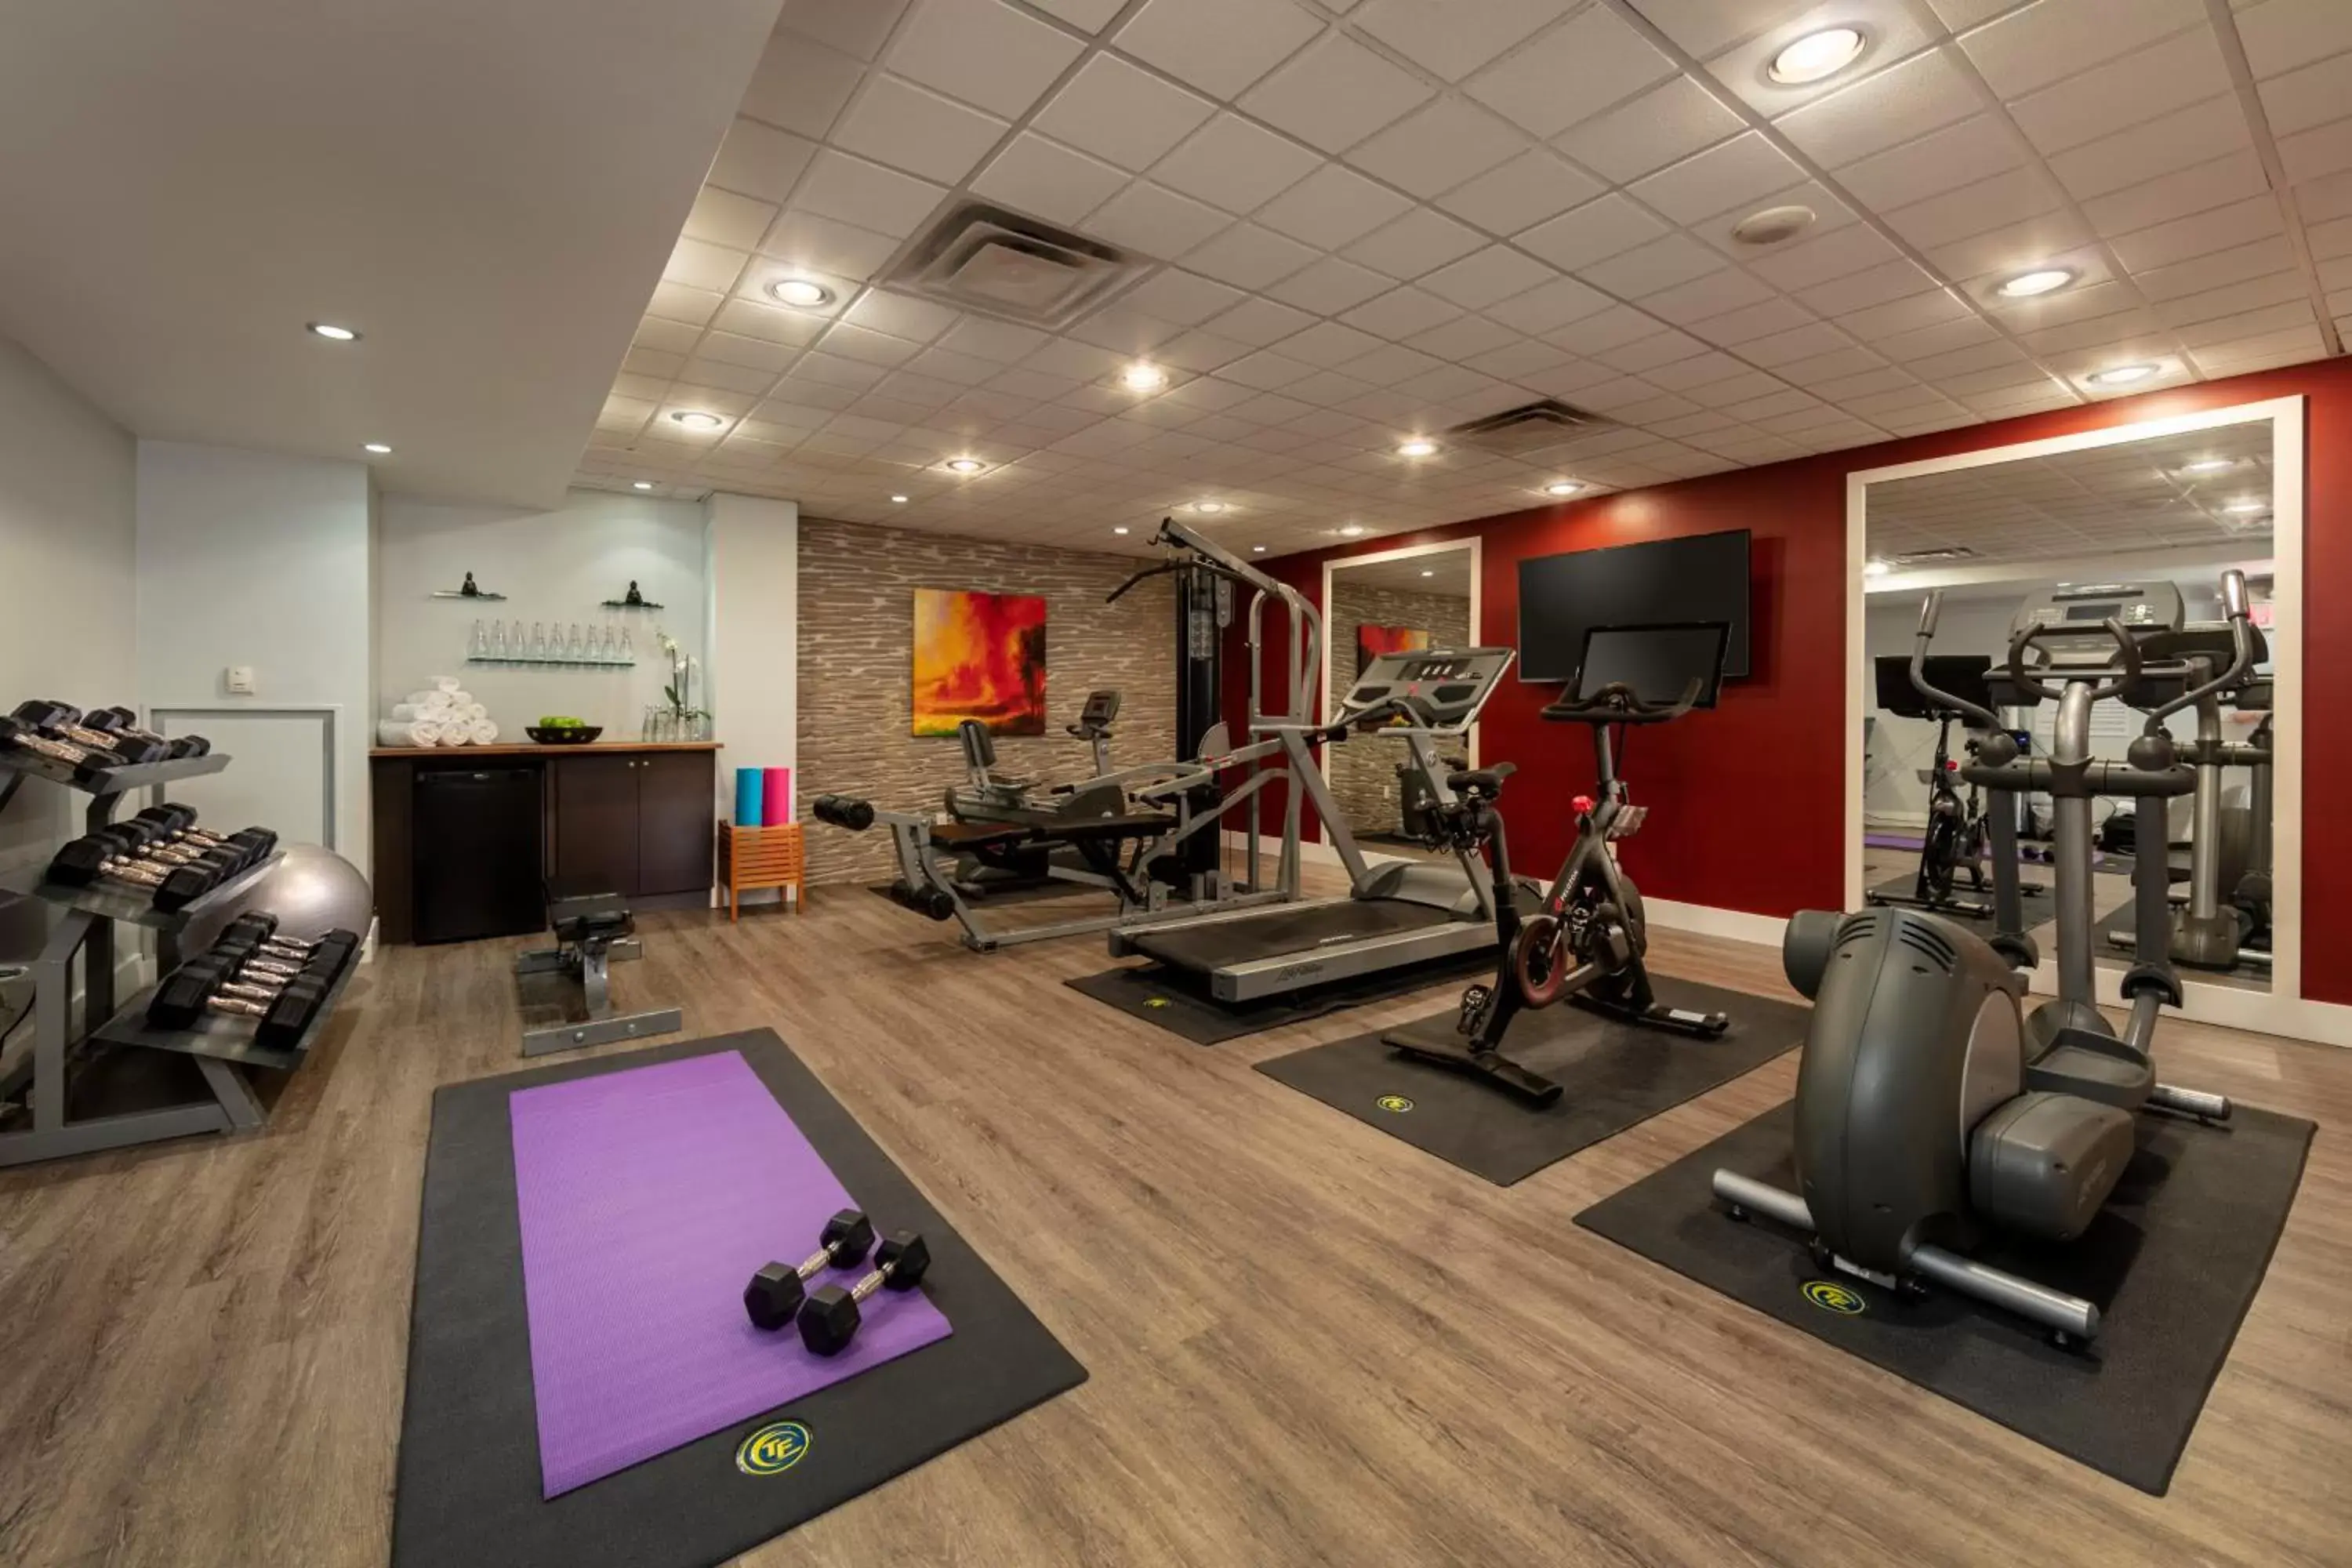 Fitness centre/facilities, Fitness Center/Facilities in Executive Hotel Cosmopolitan Toronto